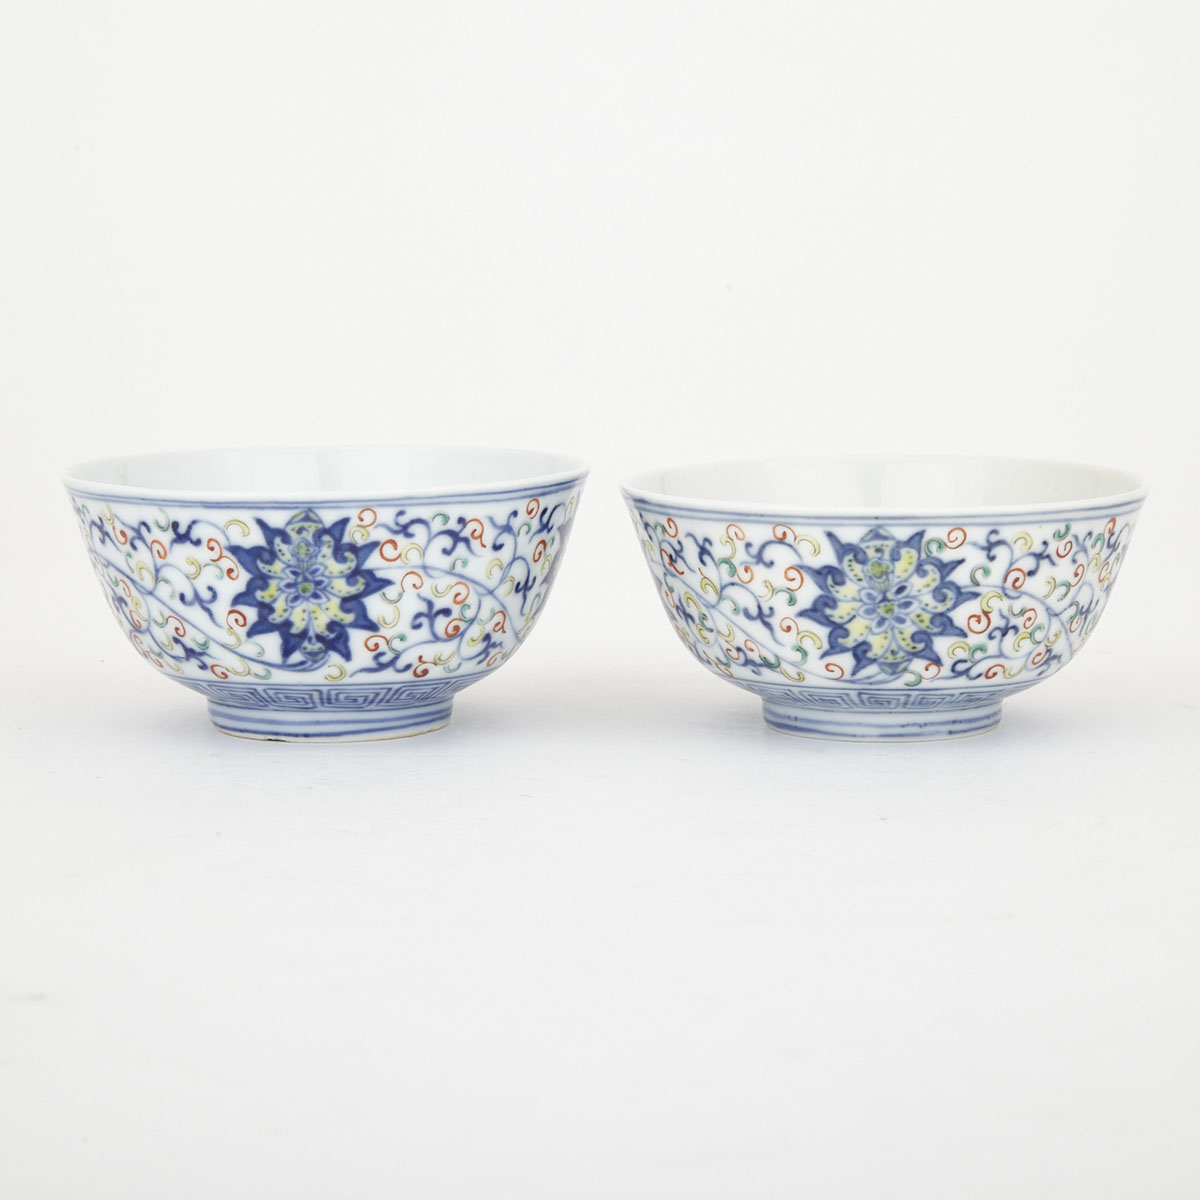 A Pair of Guangxu Bowls